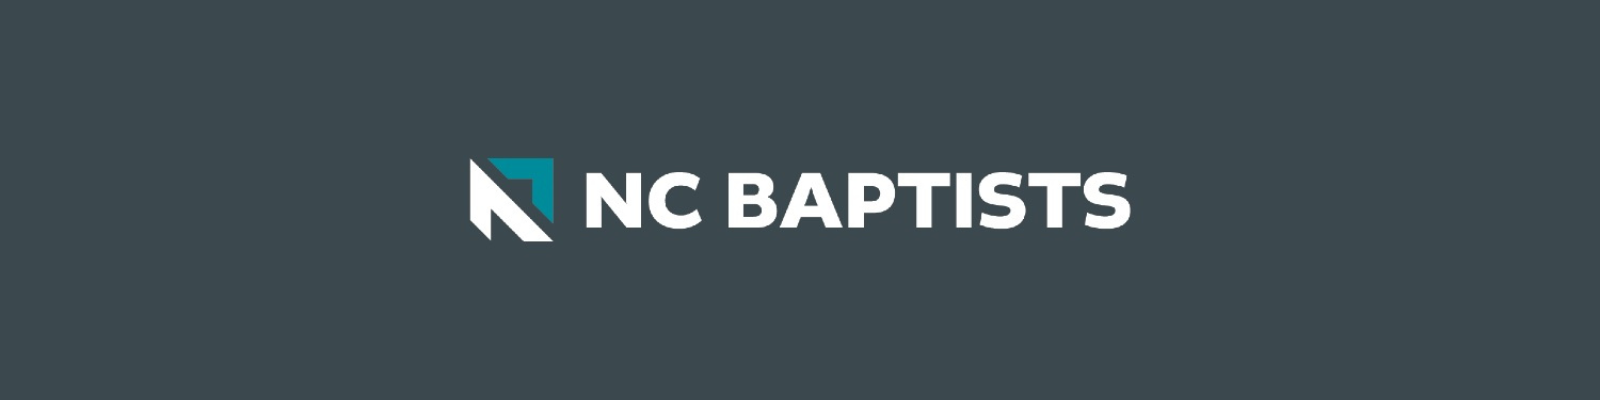 NC Baptists